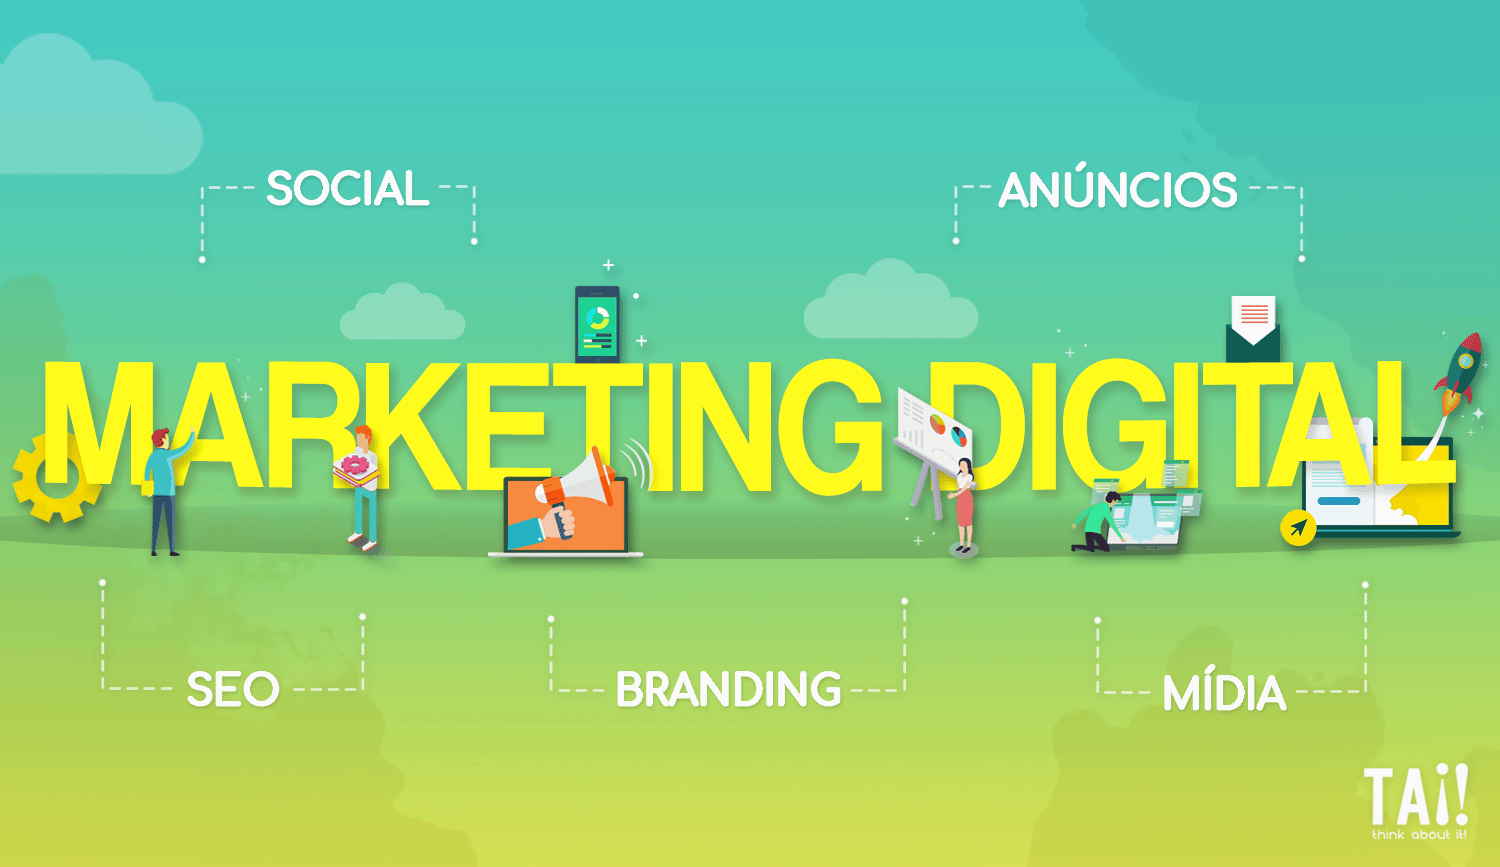 Presença no marketing digital